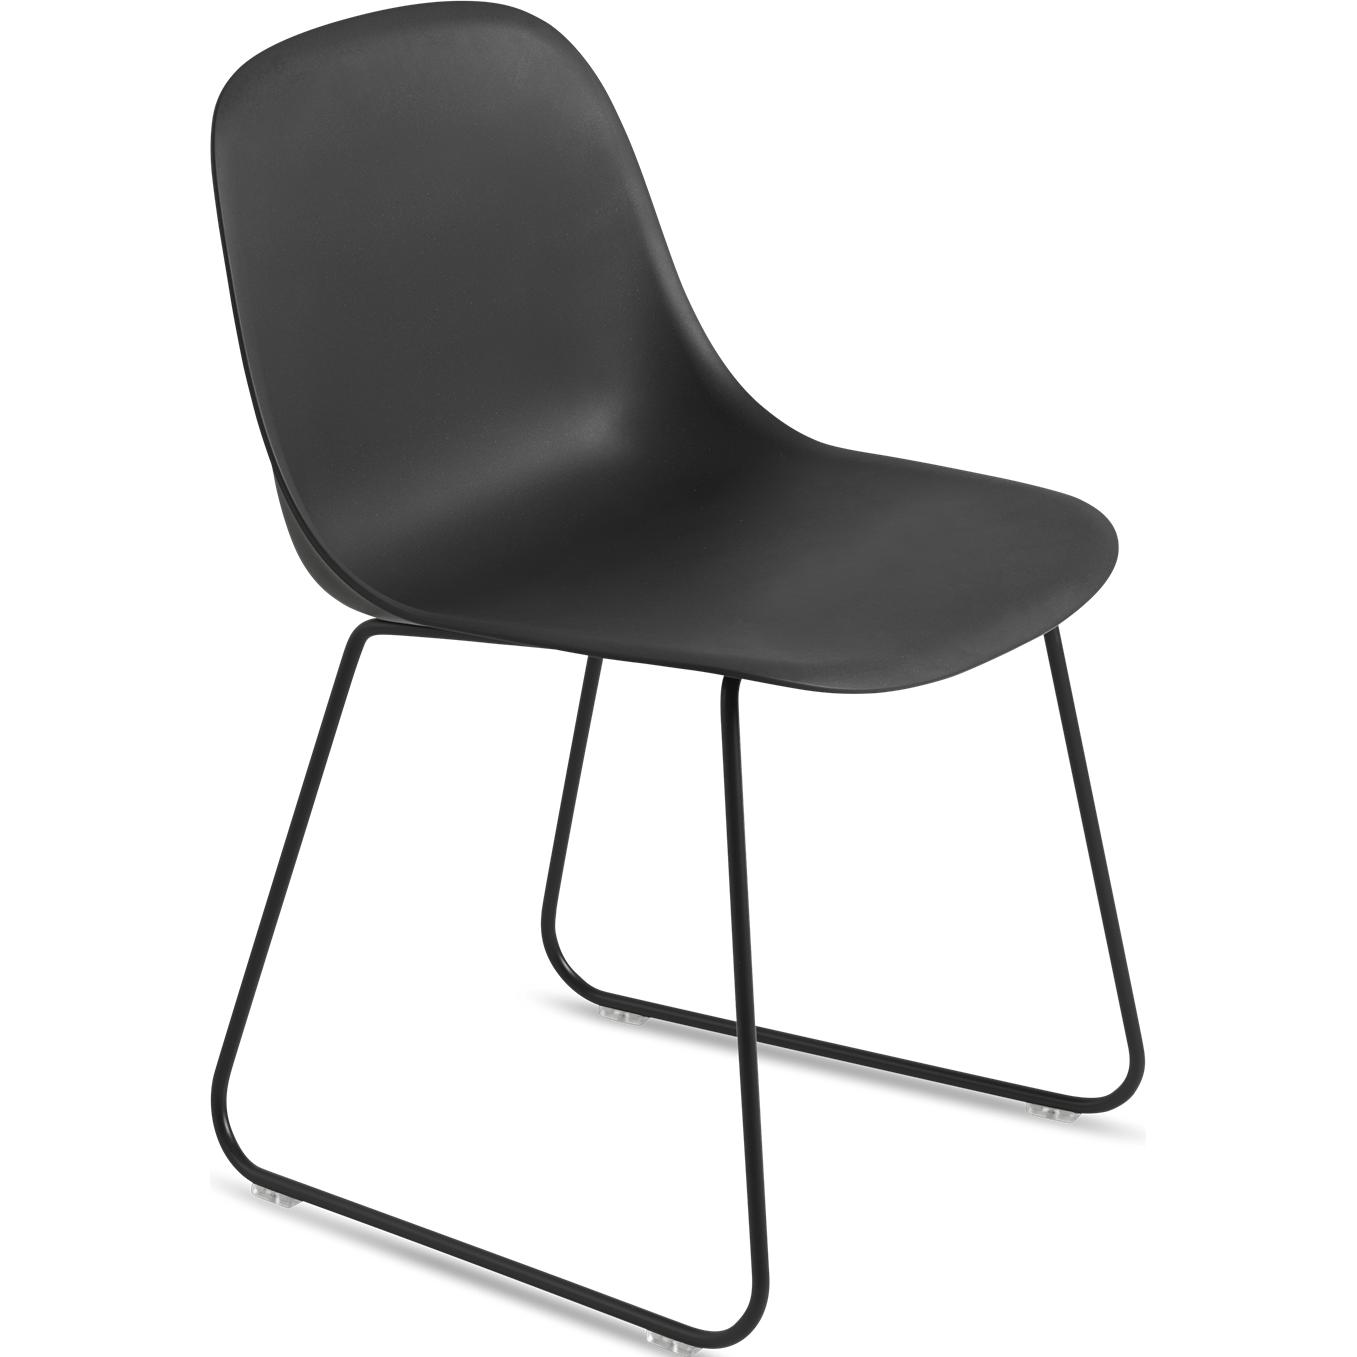 Base de trineo de silla lateral de fibra muuto, asiento de fibra, negro